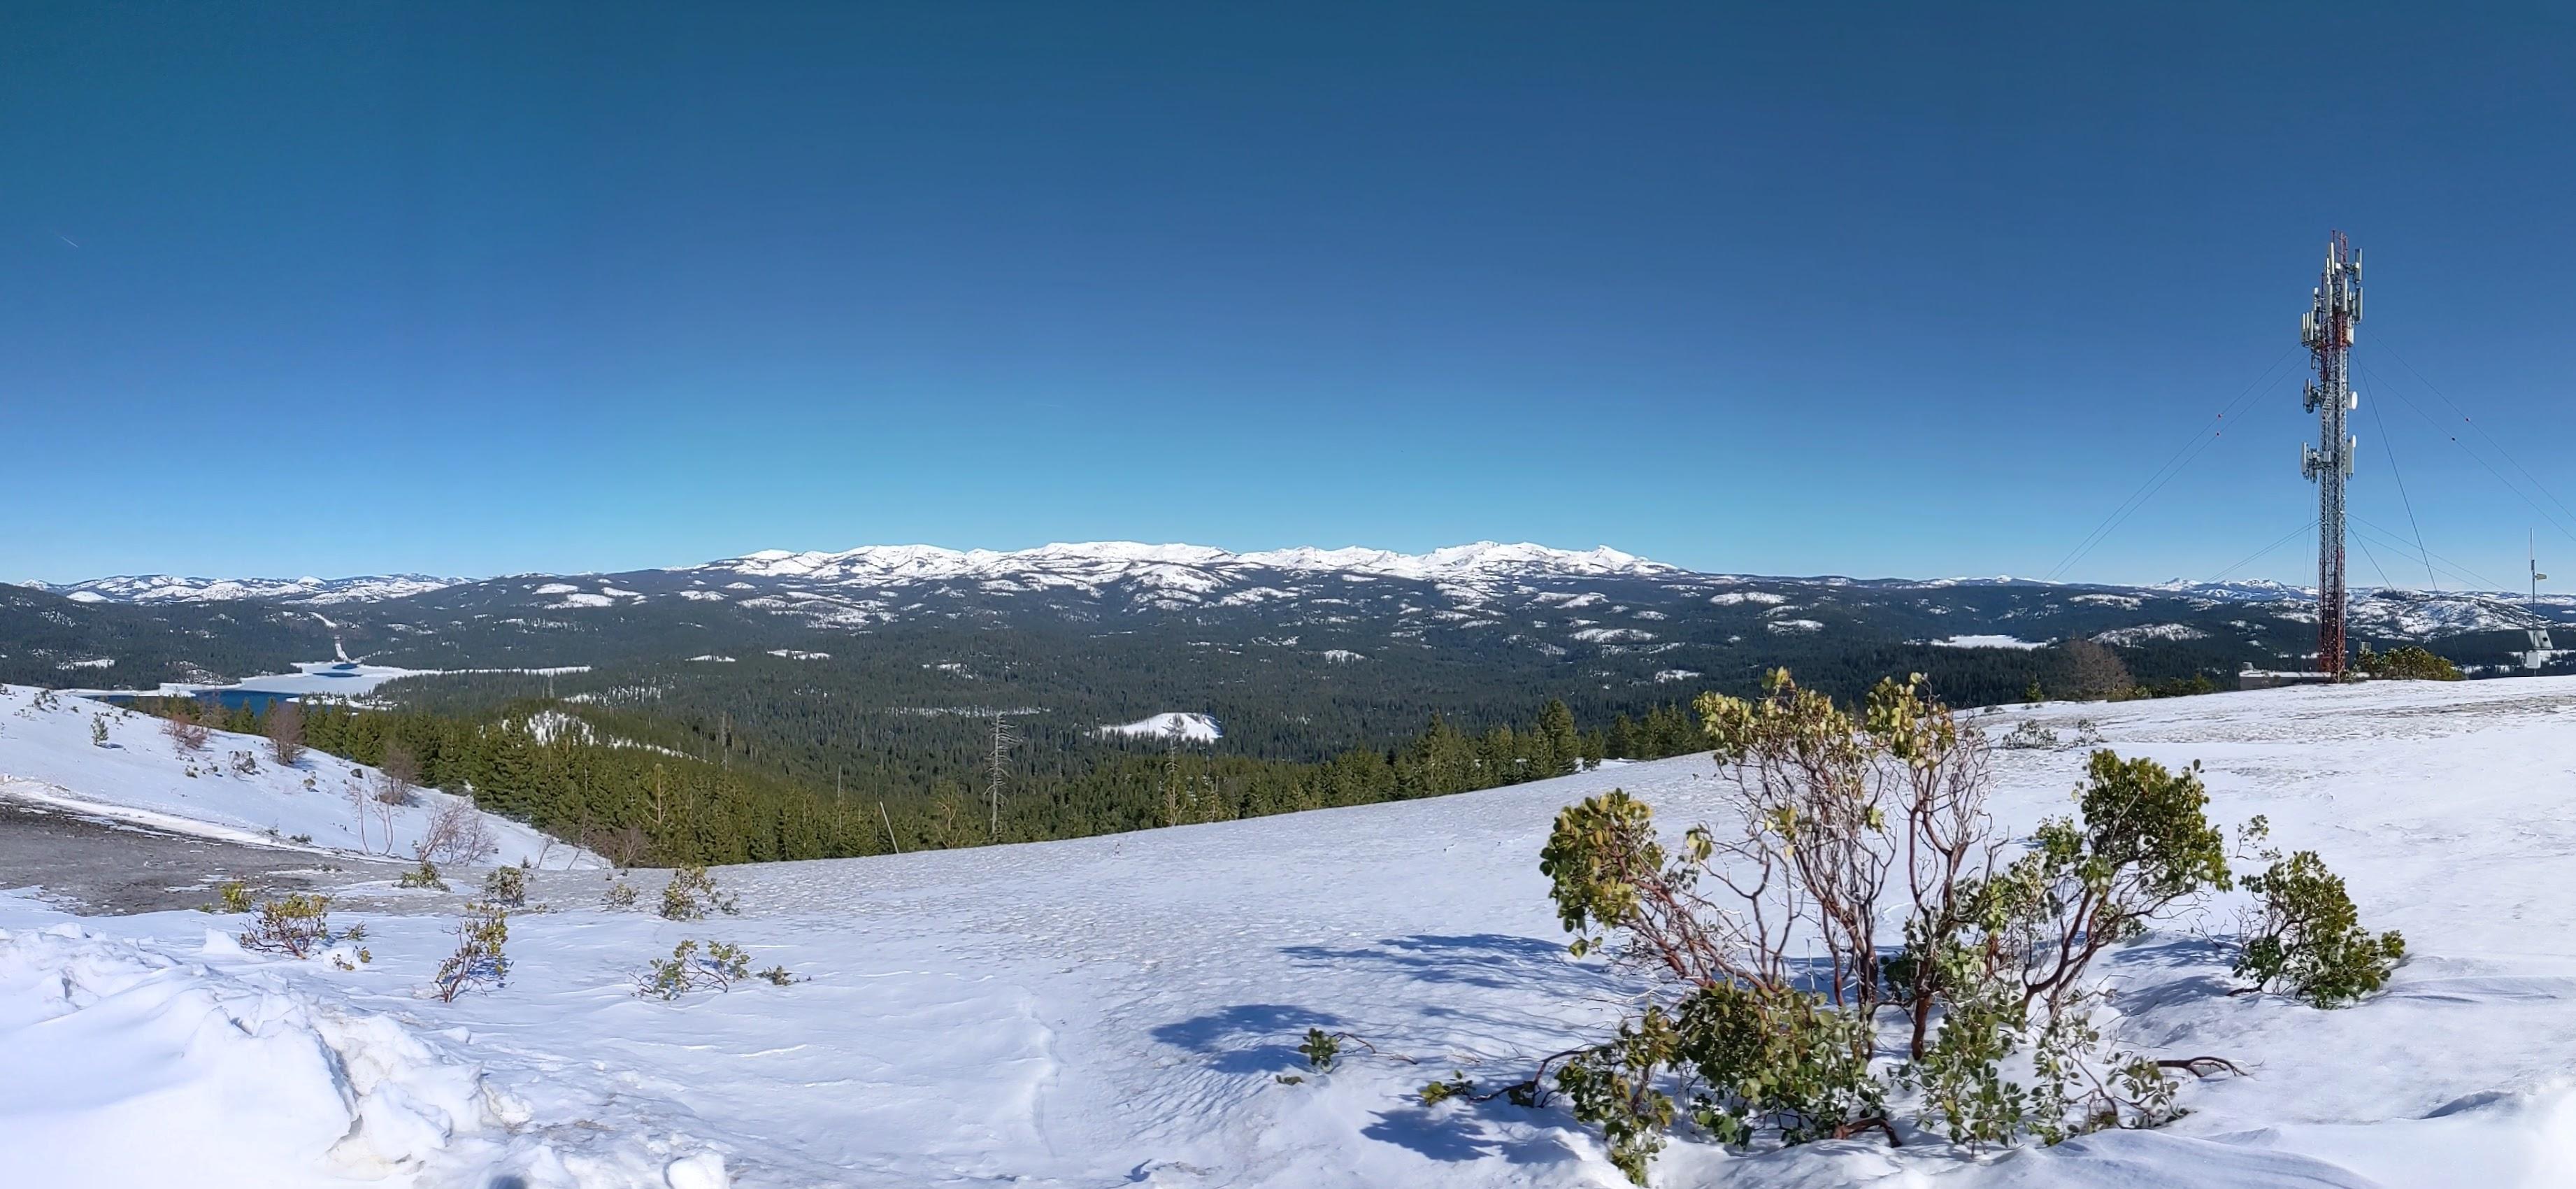 North-Eastern panorama, Lake Tahoe is right behind this range